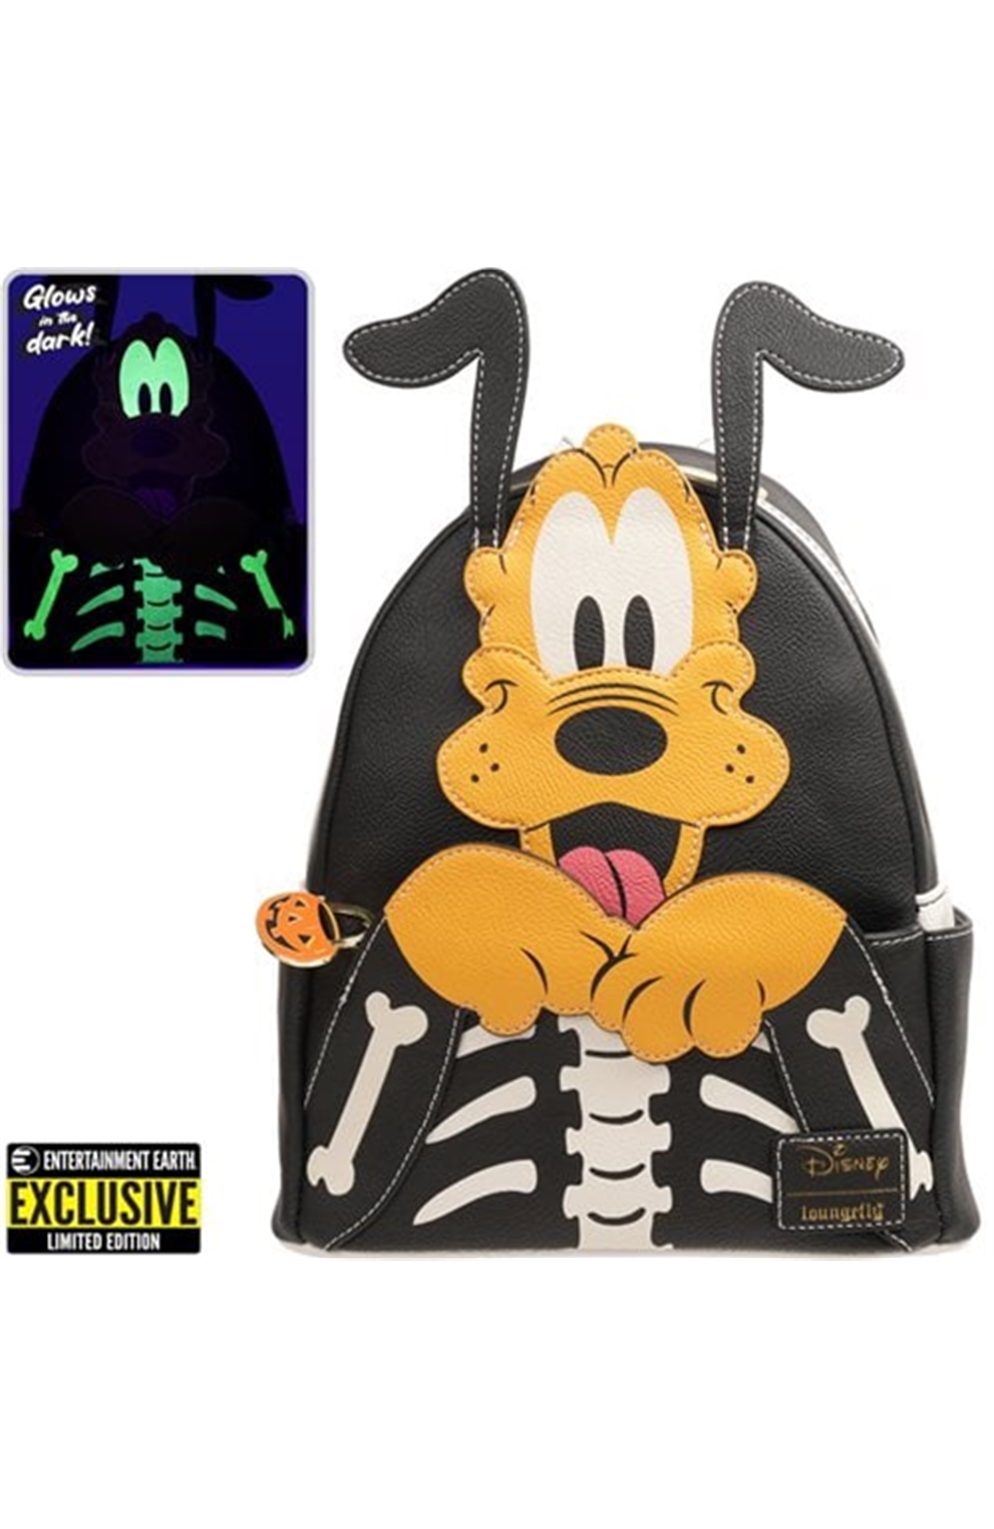 Disney Pluto Skellington Glow-In-The-Dark Mini-Backpack - Entertainment Earth Exclusive